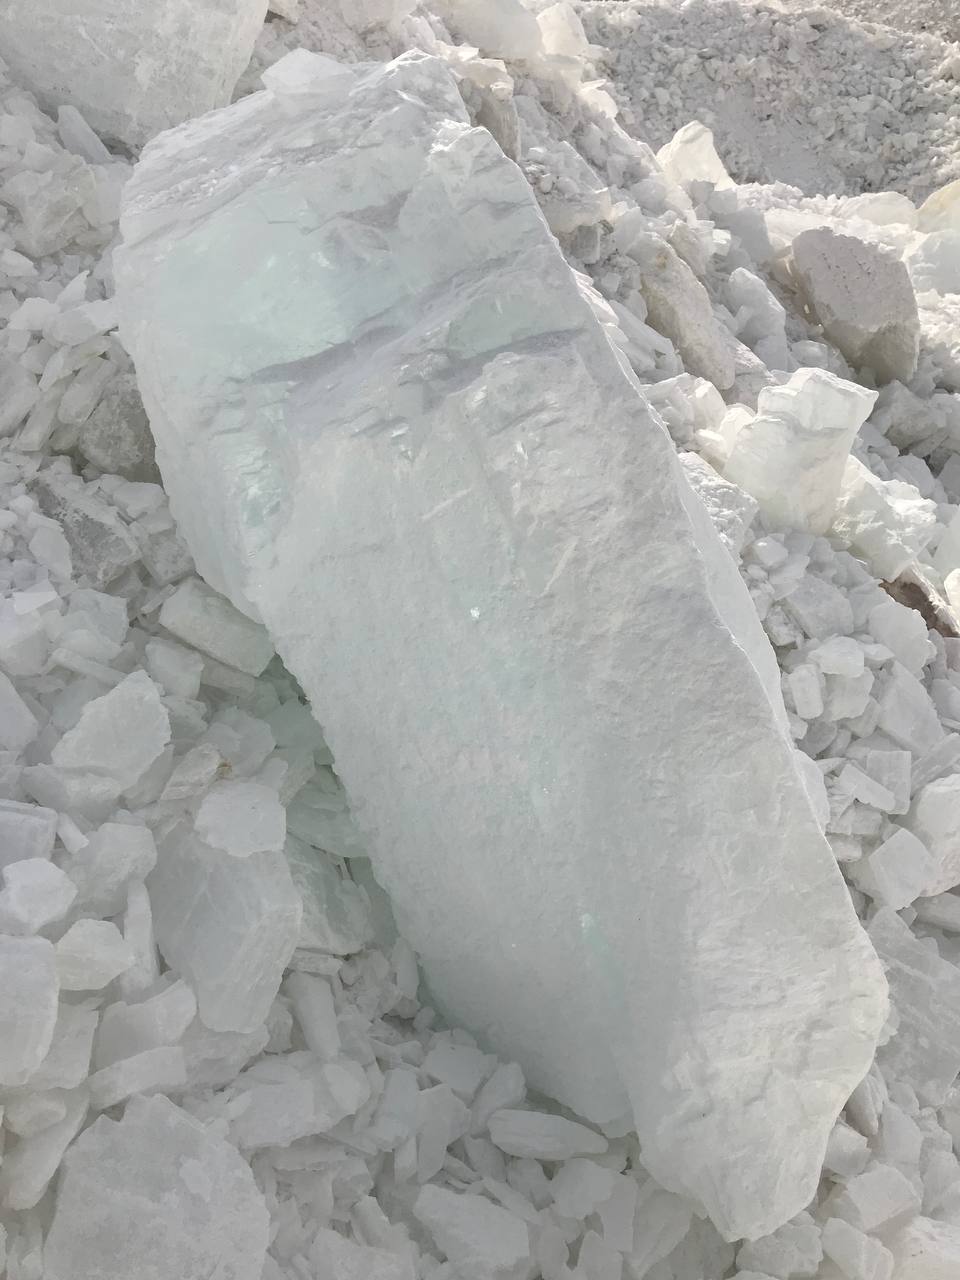 large gypsum rock